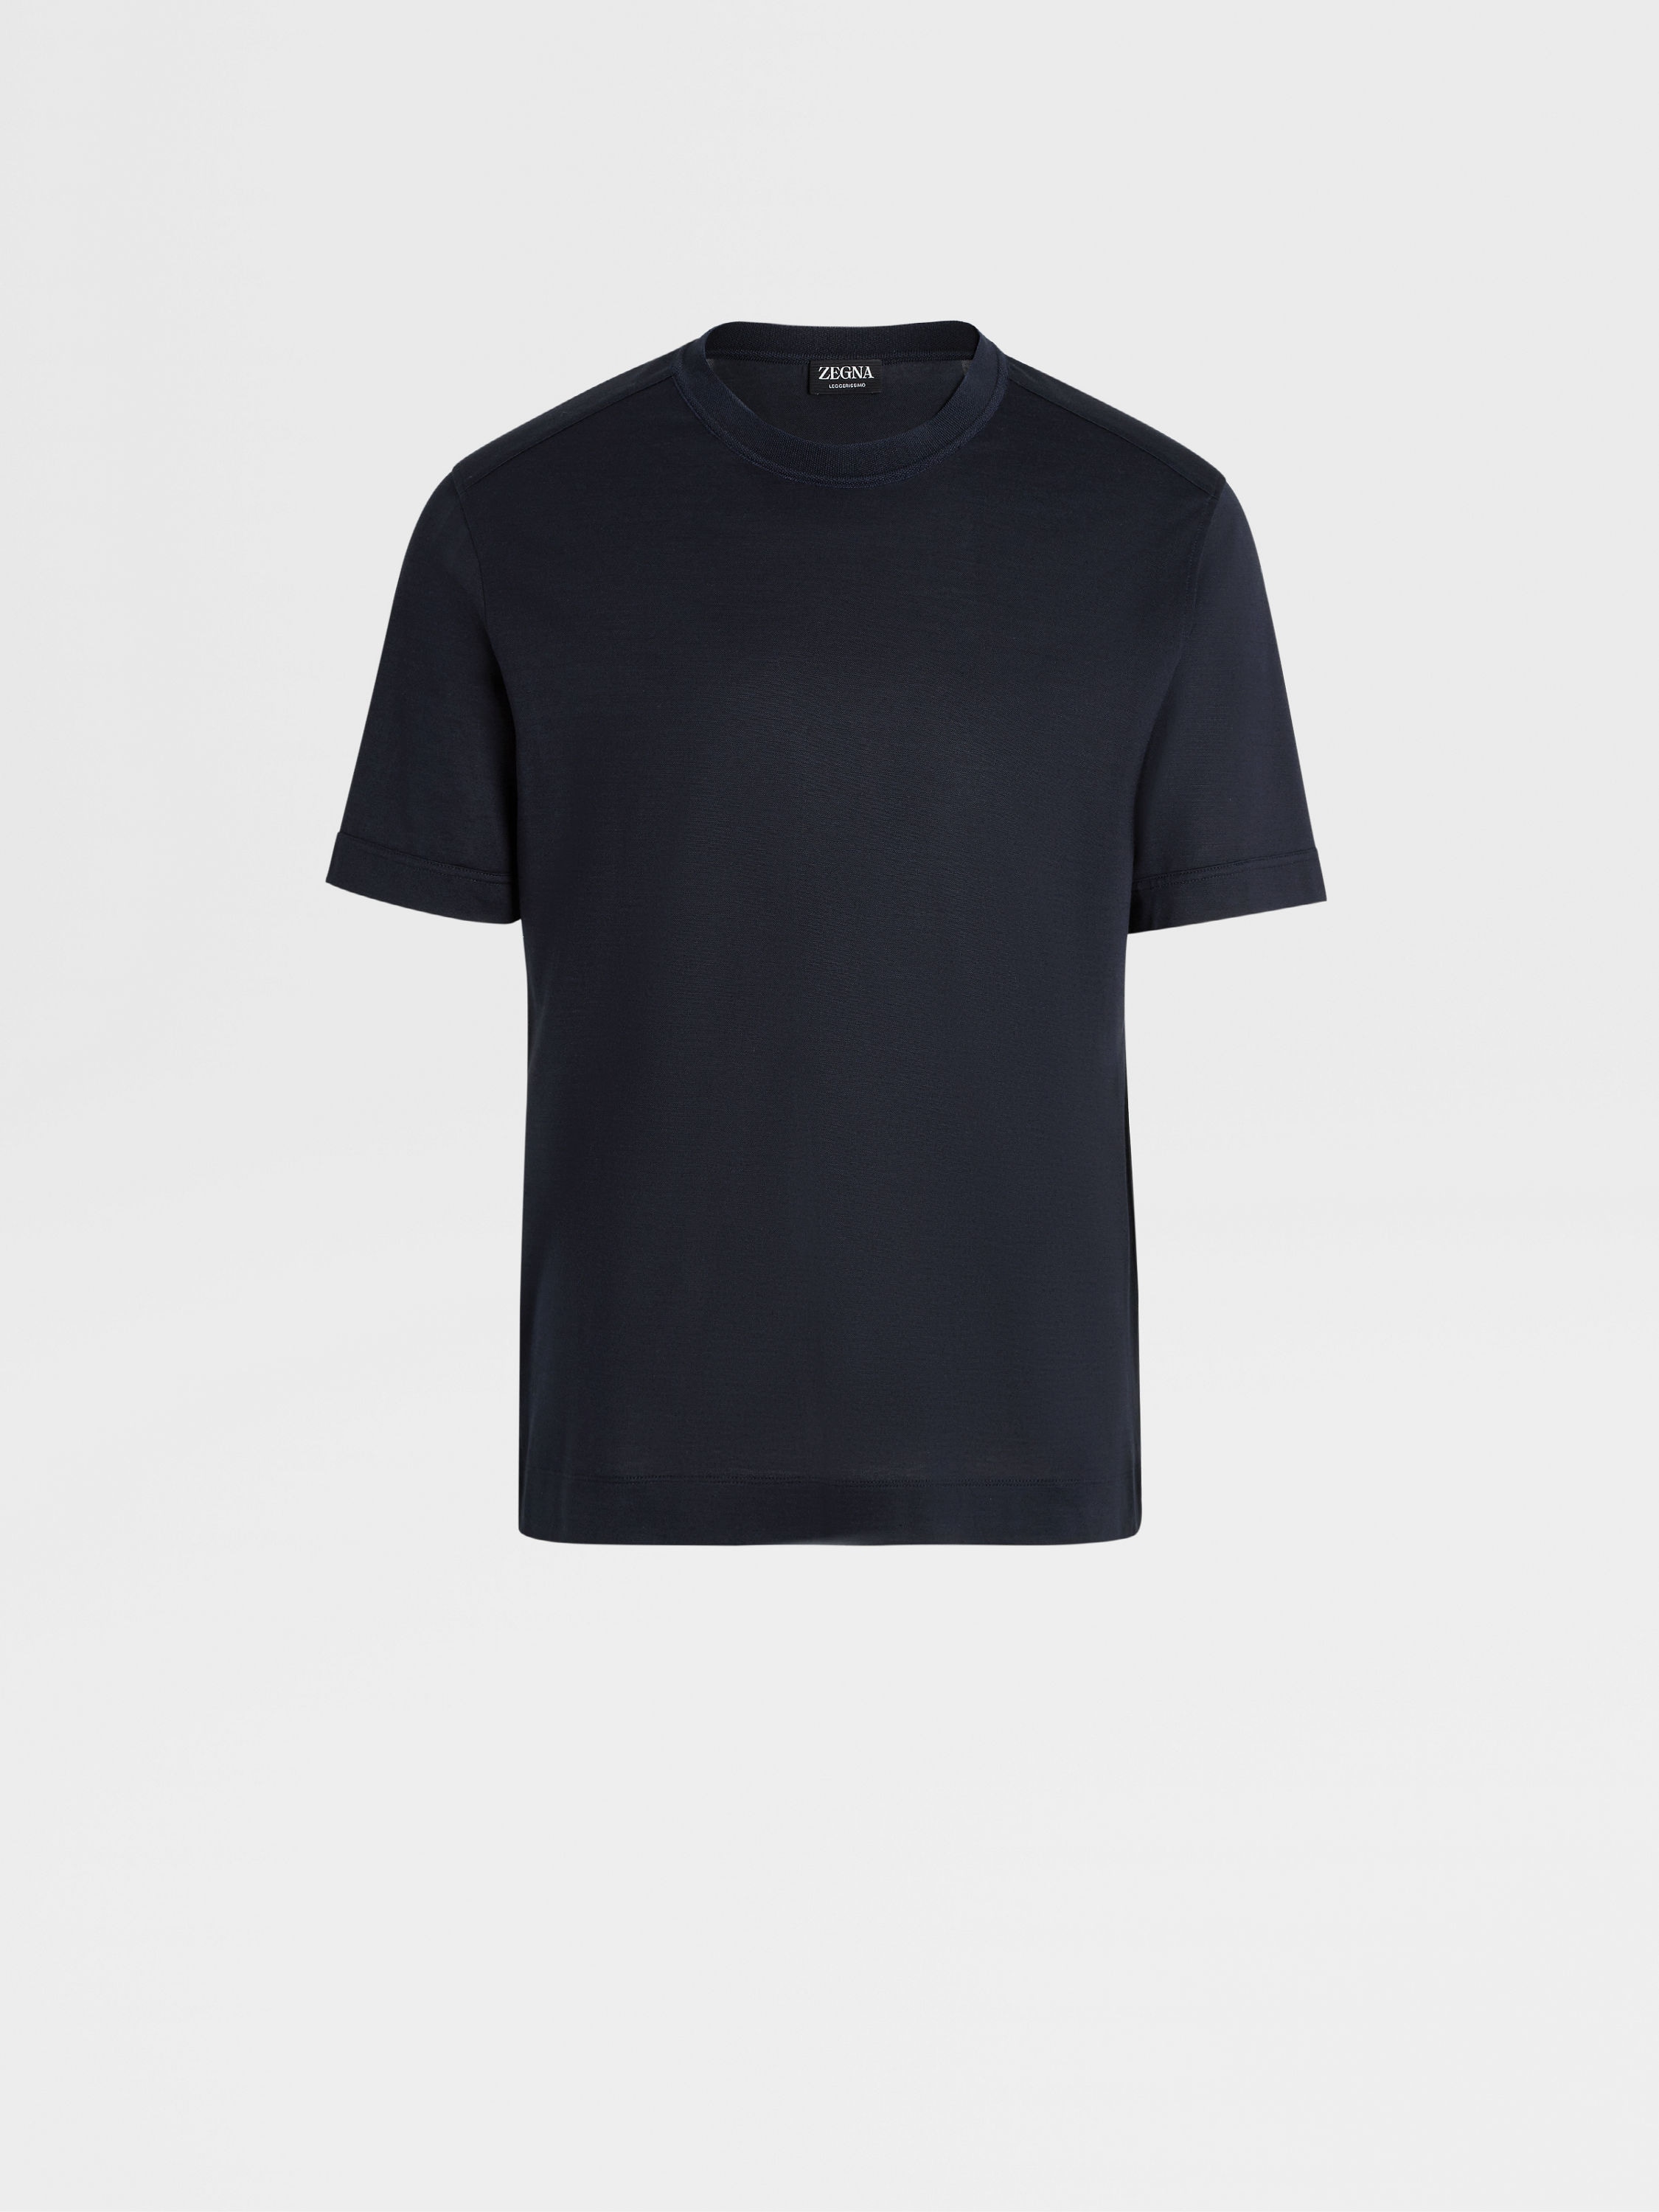 Navy Blue Leggerissimo Cotton and Silk T-shirt SS24 26596480 | Zegna IN